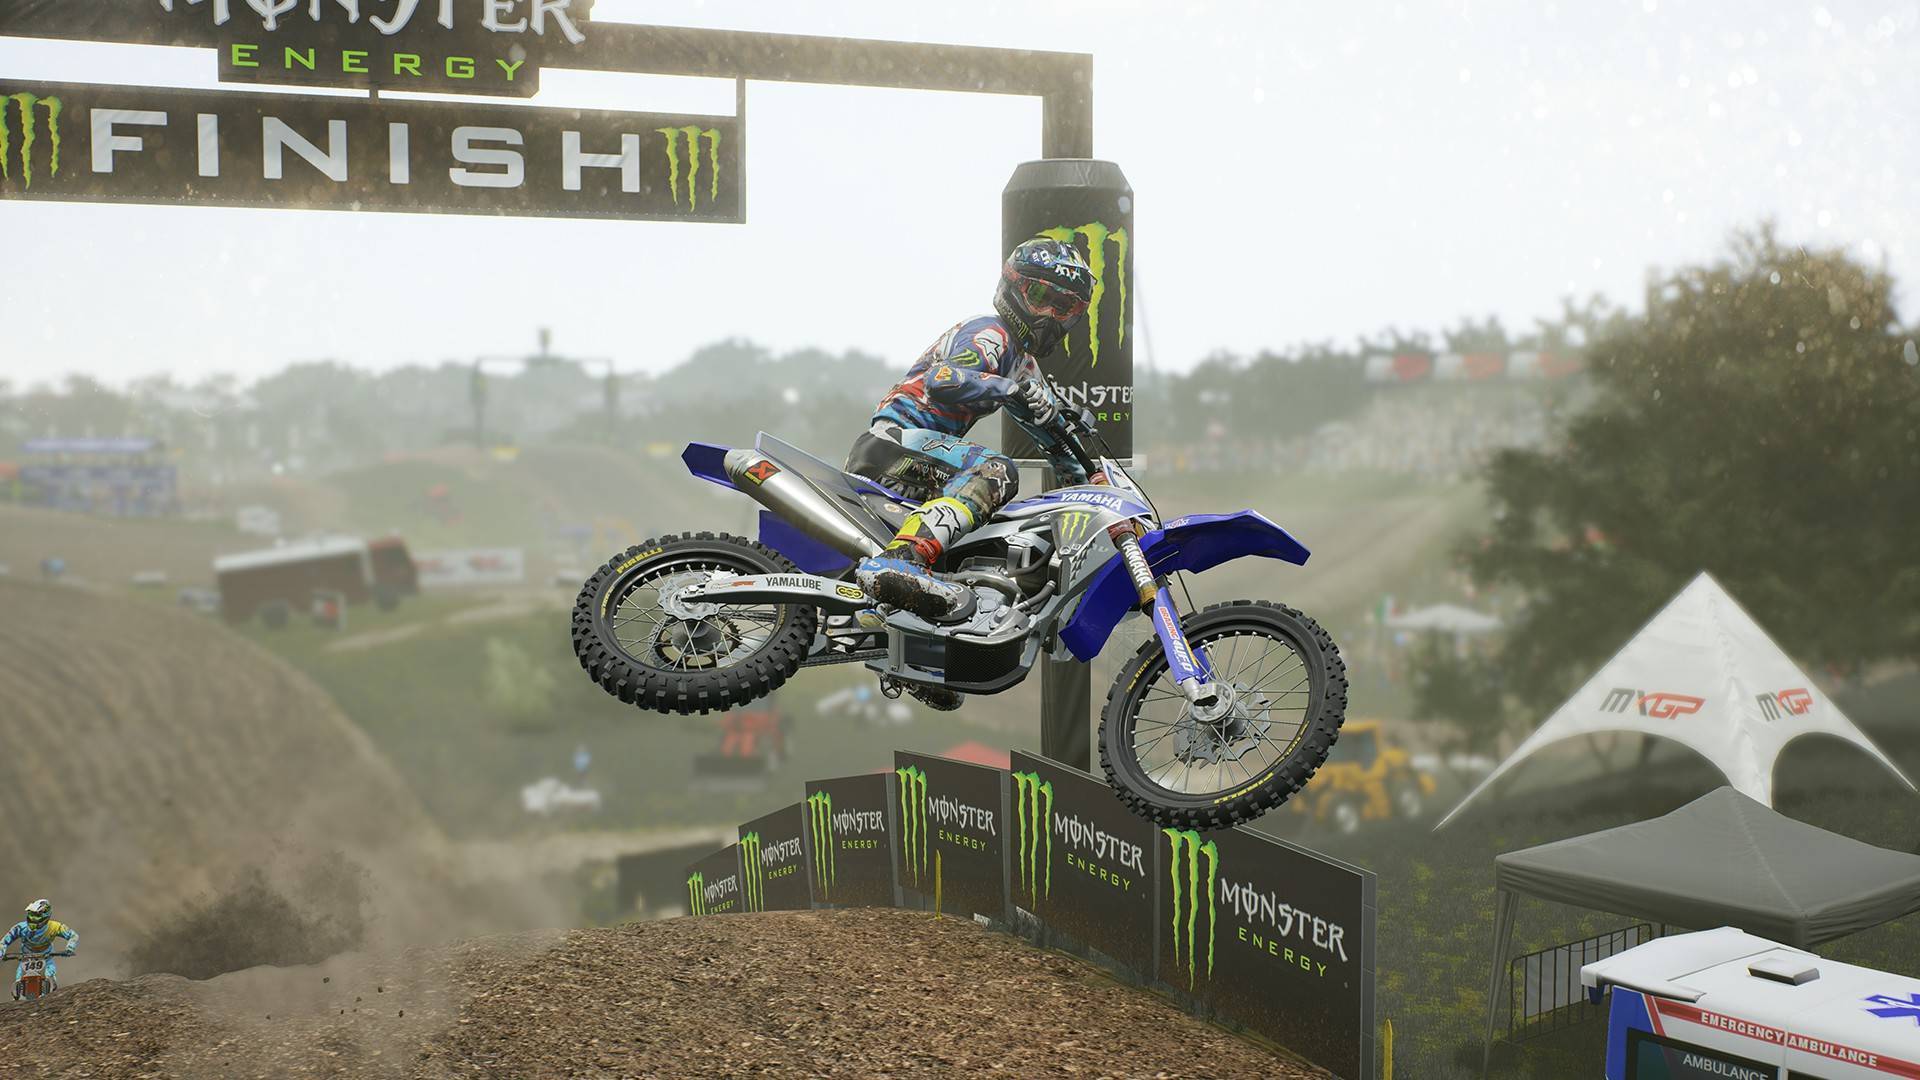 MXGP3 – The Official Motocross Videogame